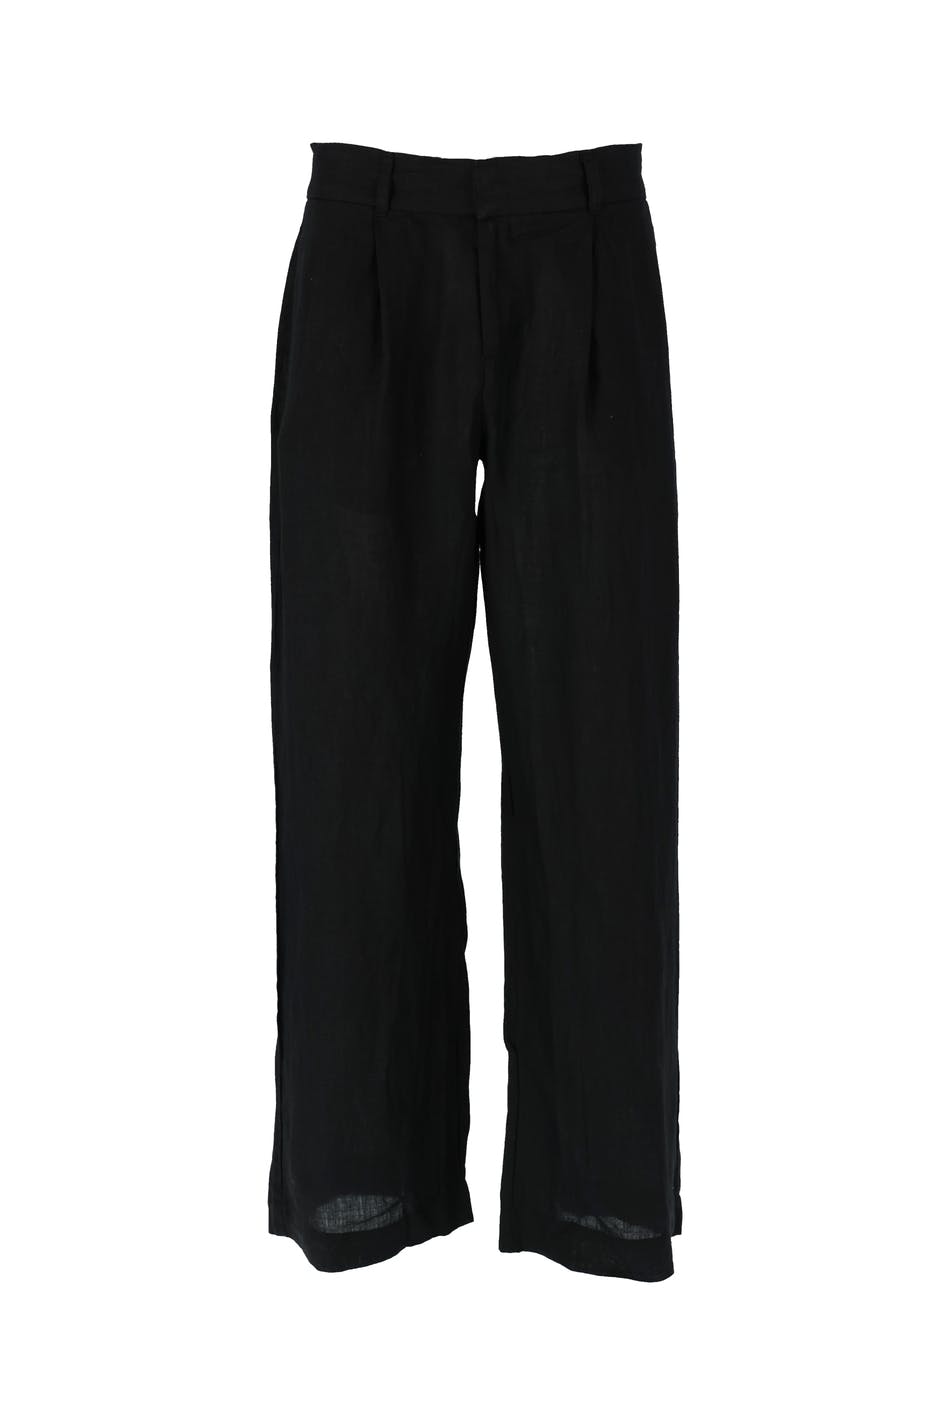 Gina Tricot - Tall linen trousers - linnebyxor - Black - XXL - Female